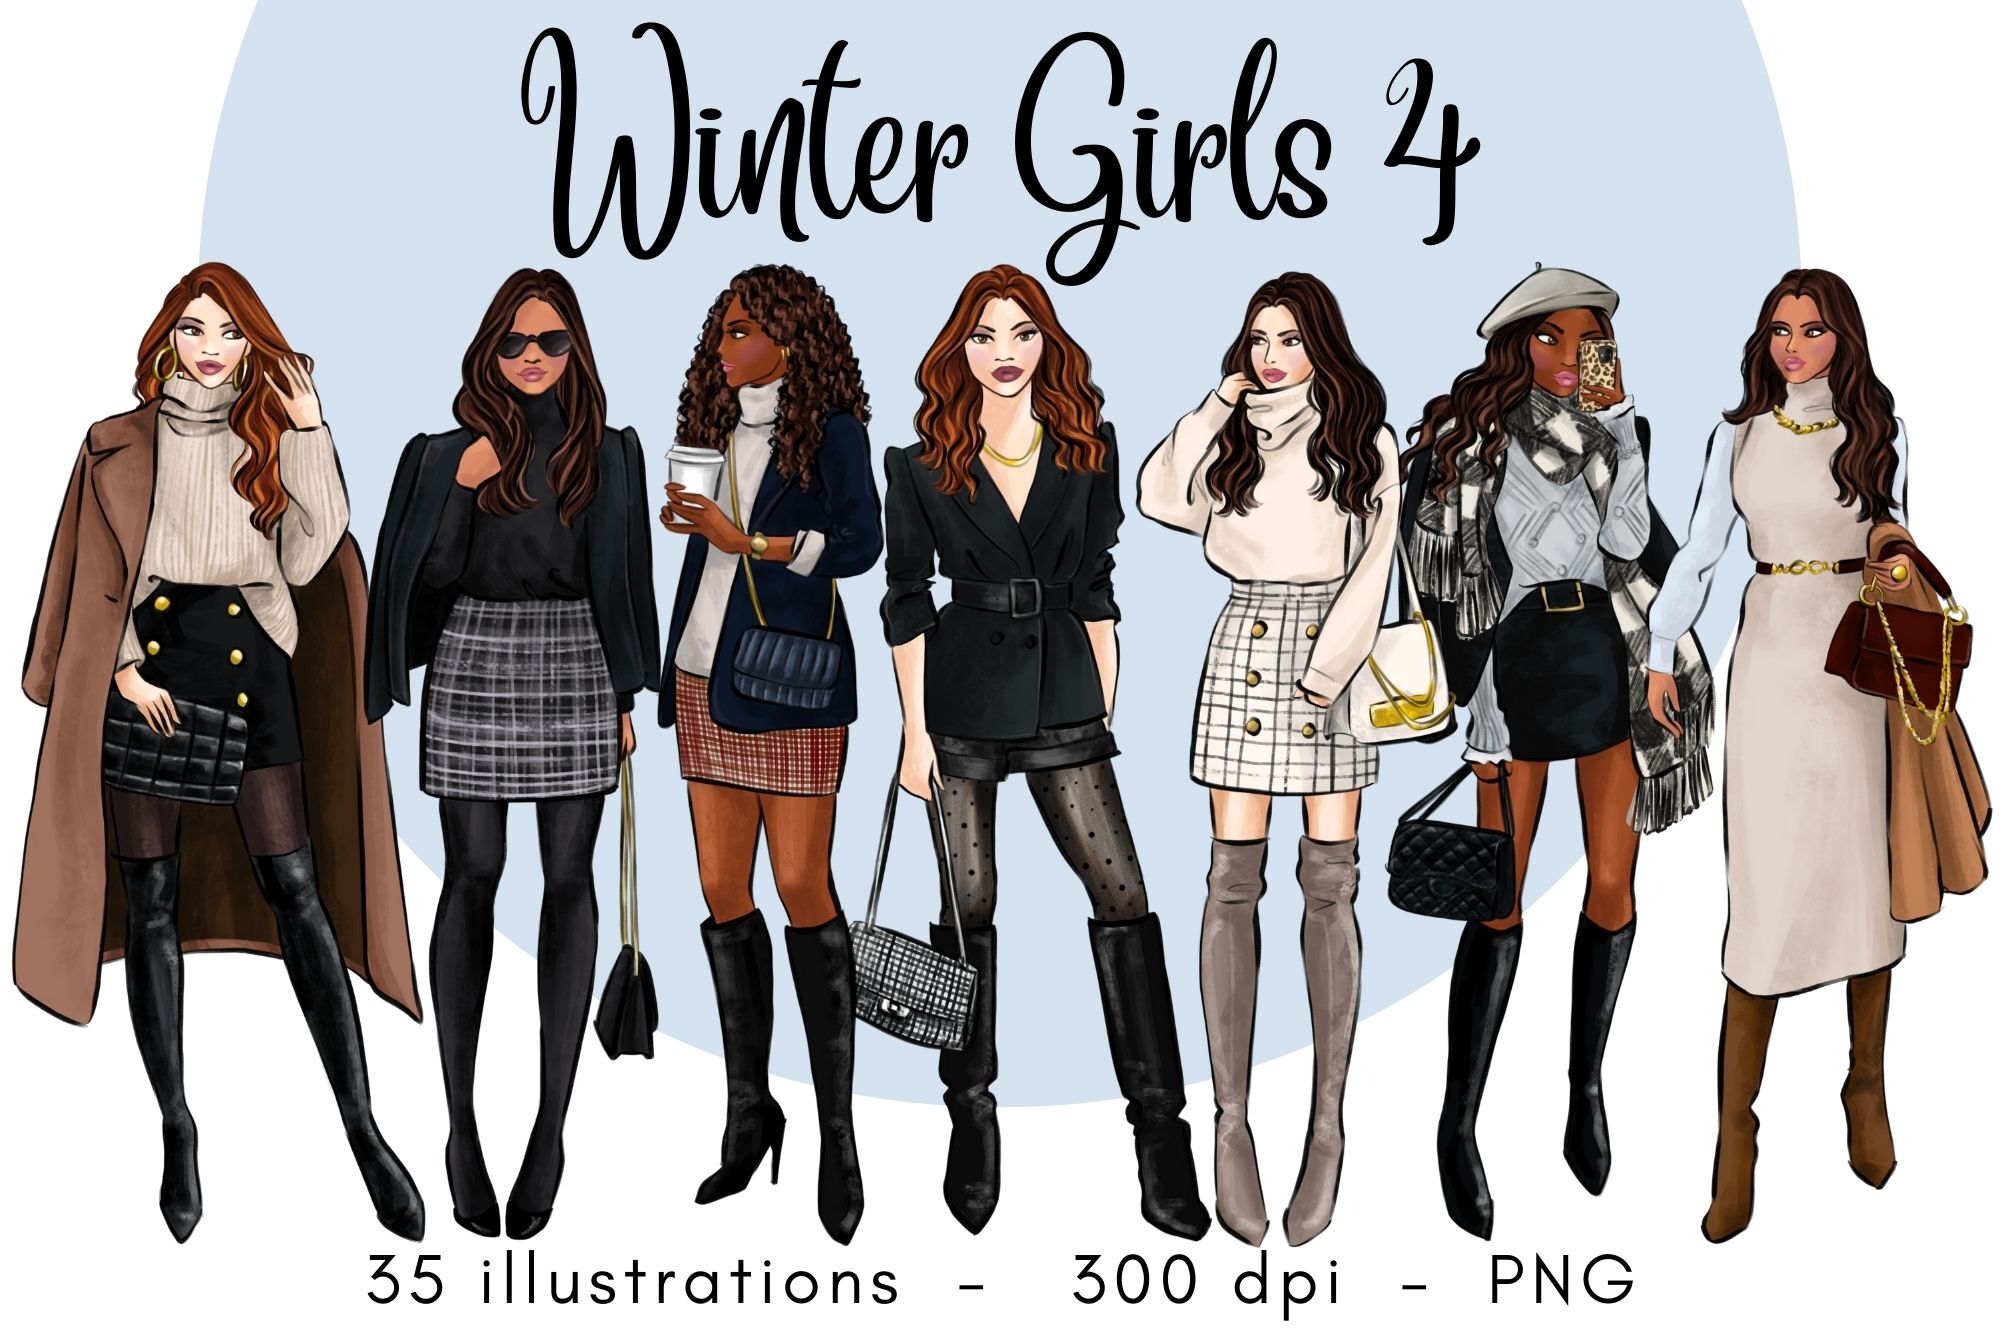 Winter Girls 4 fashion clipart set By Parinaz Wadia Design